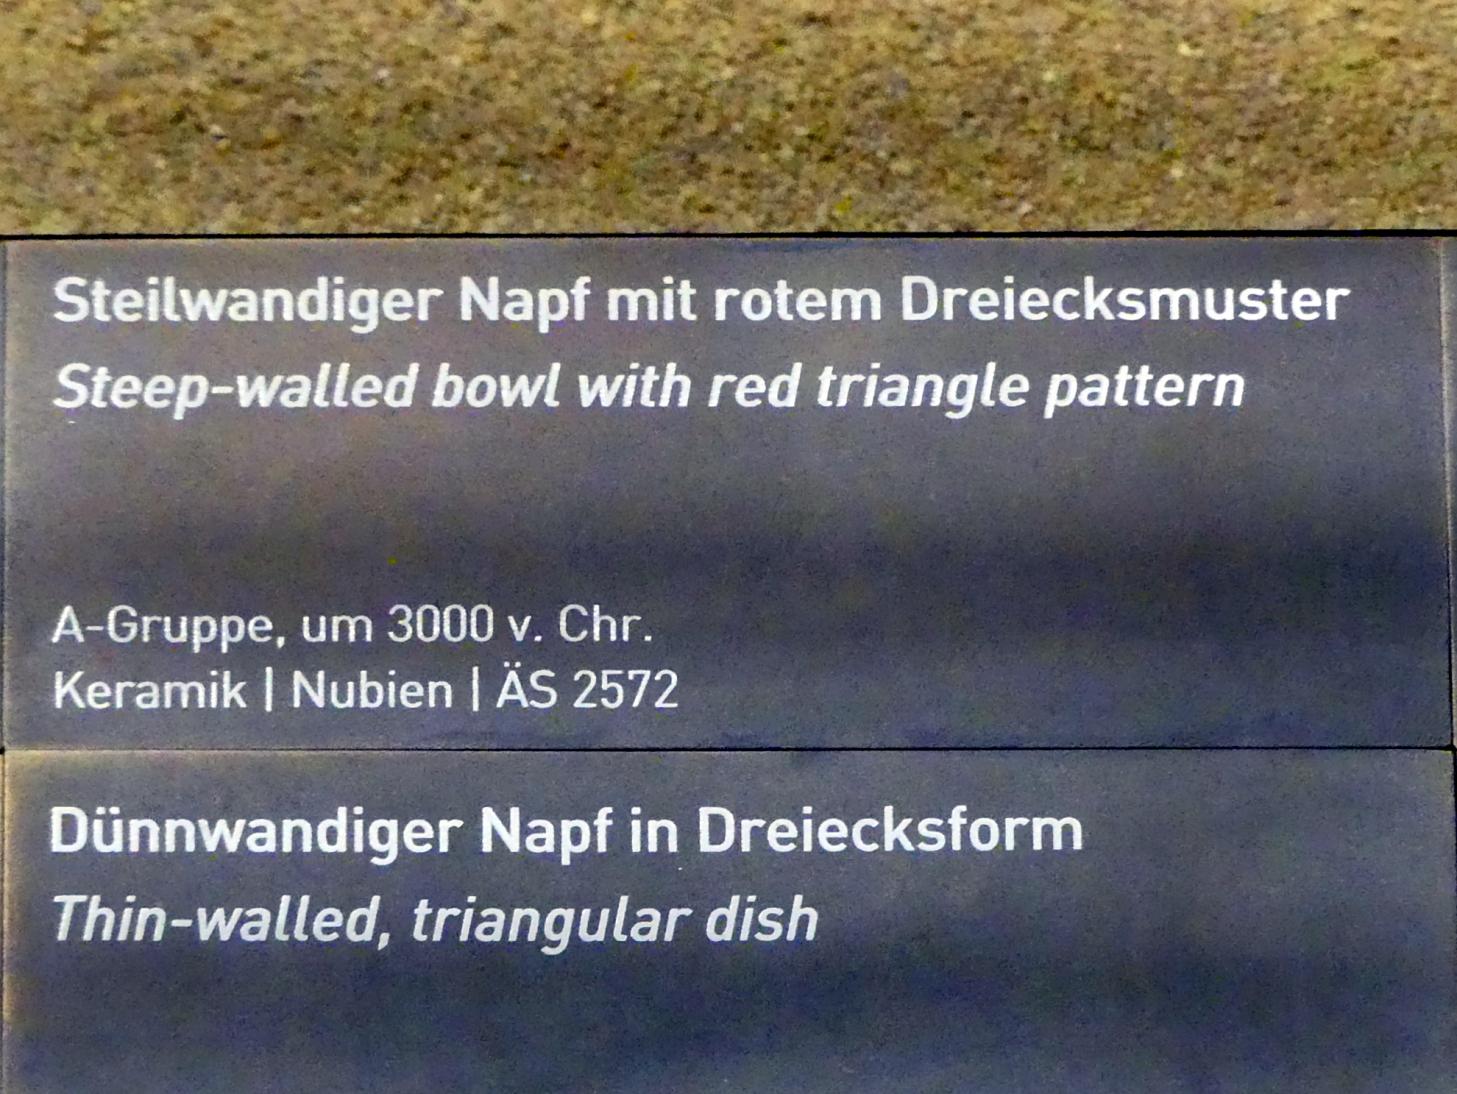 Steilwandiger Napf mit rotem Dreiecksmuster, A-Gruppe, 3200 - 3000 v. Chr., 3000 v. Chr., Bild 2/2